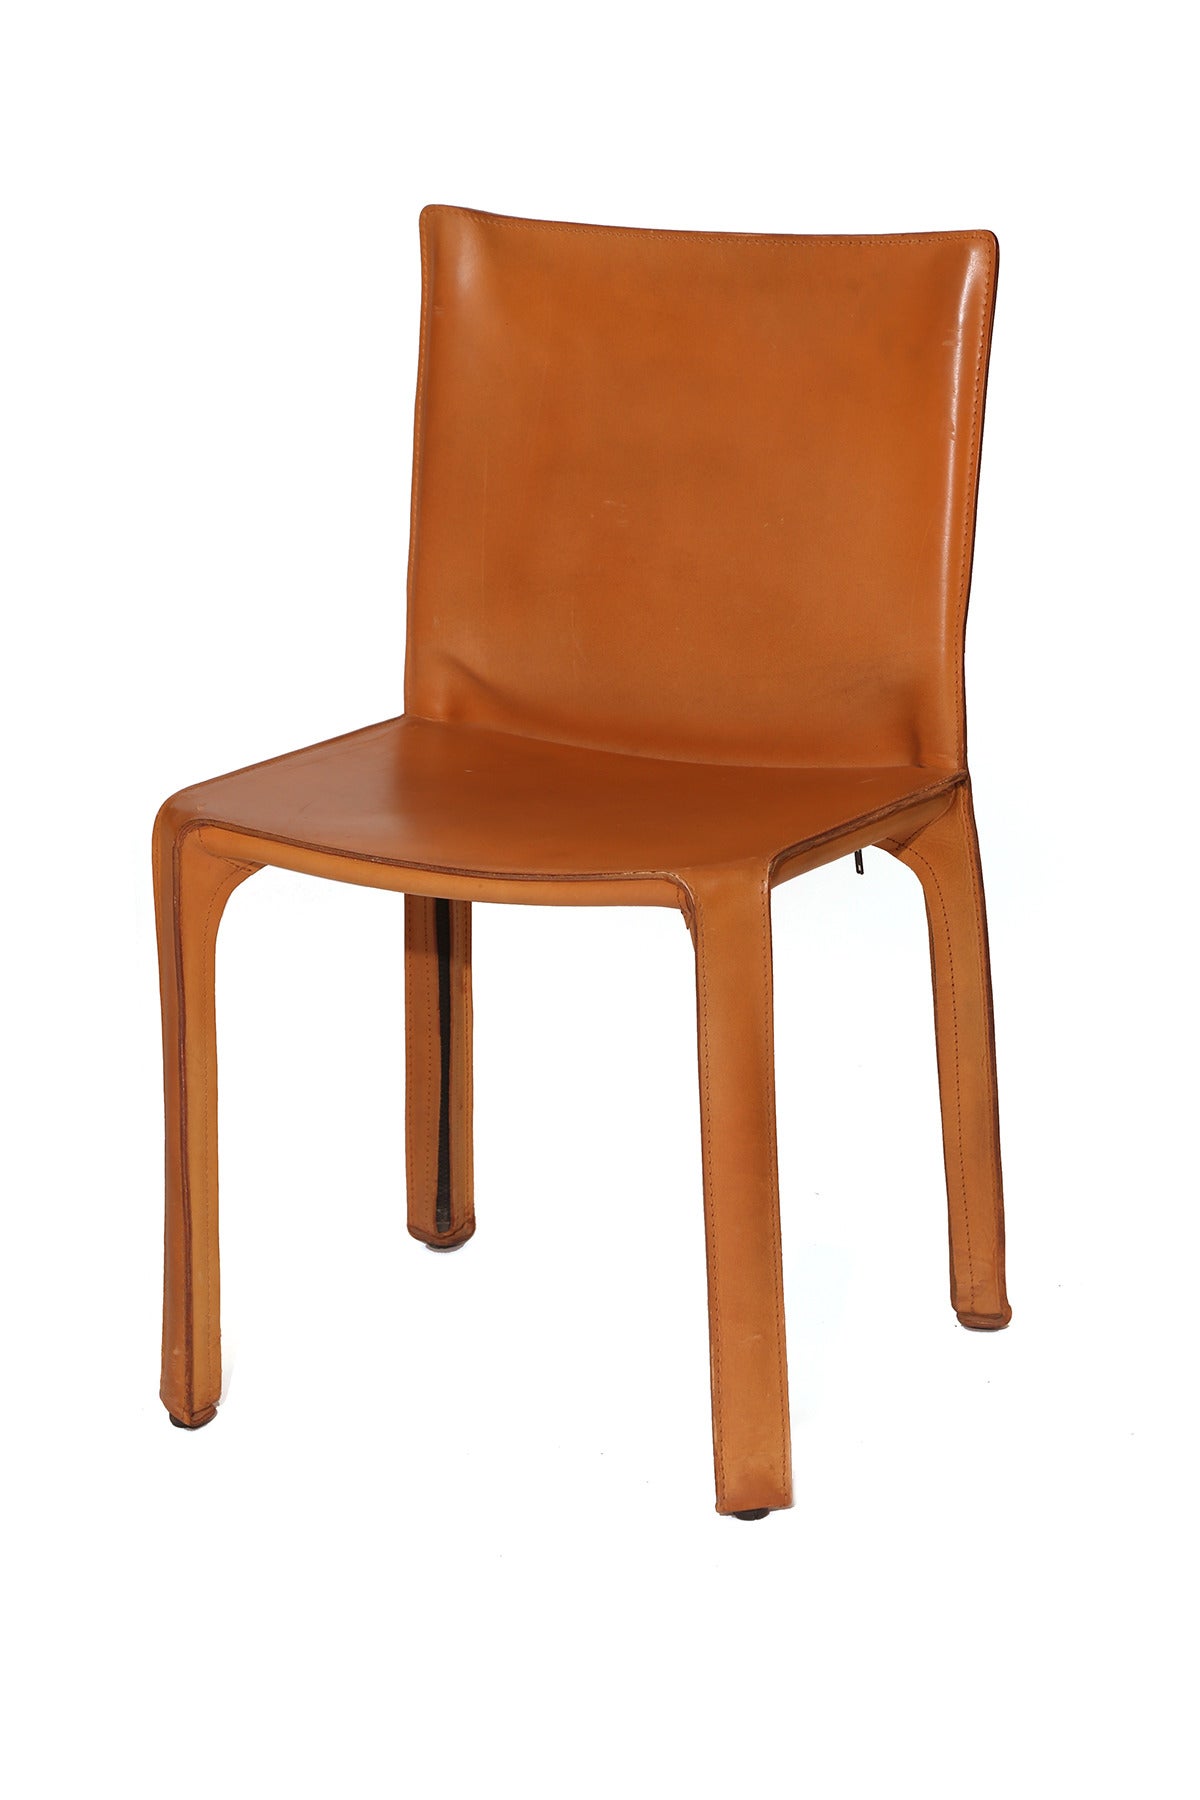 Italian Six Mario Bellini for Cassina Leather 'Cab' Chairs